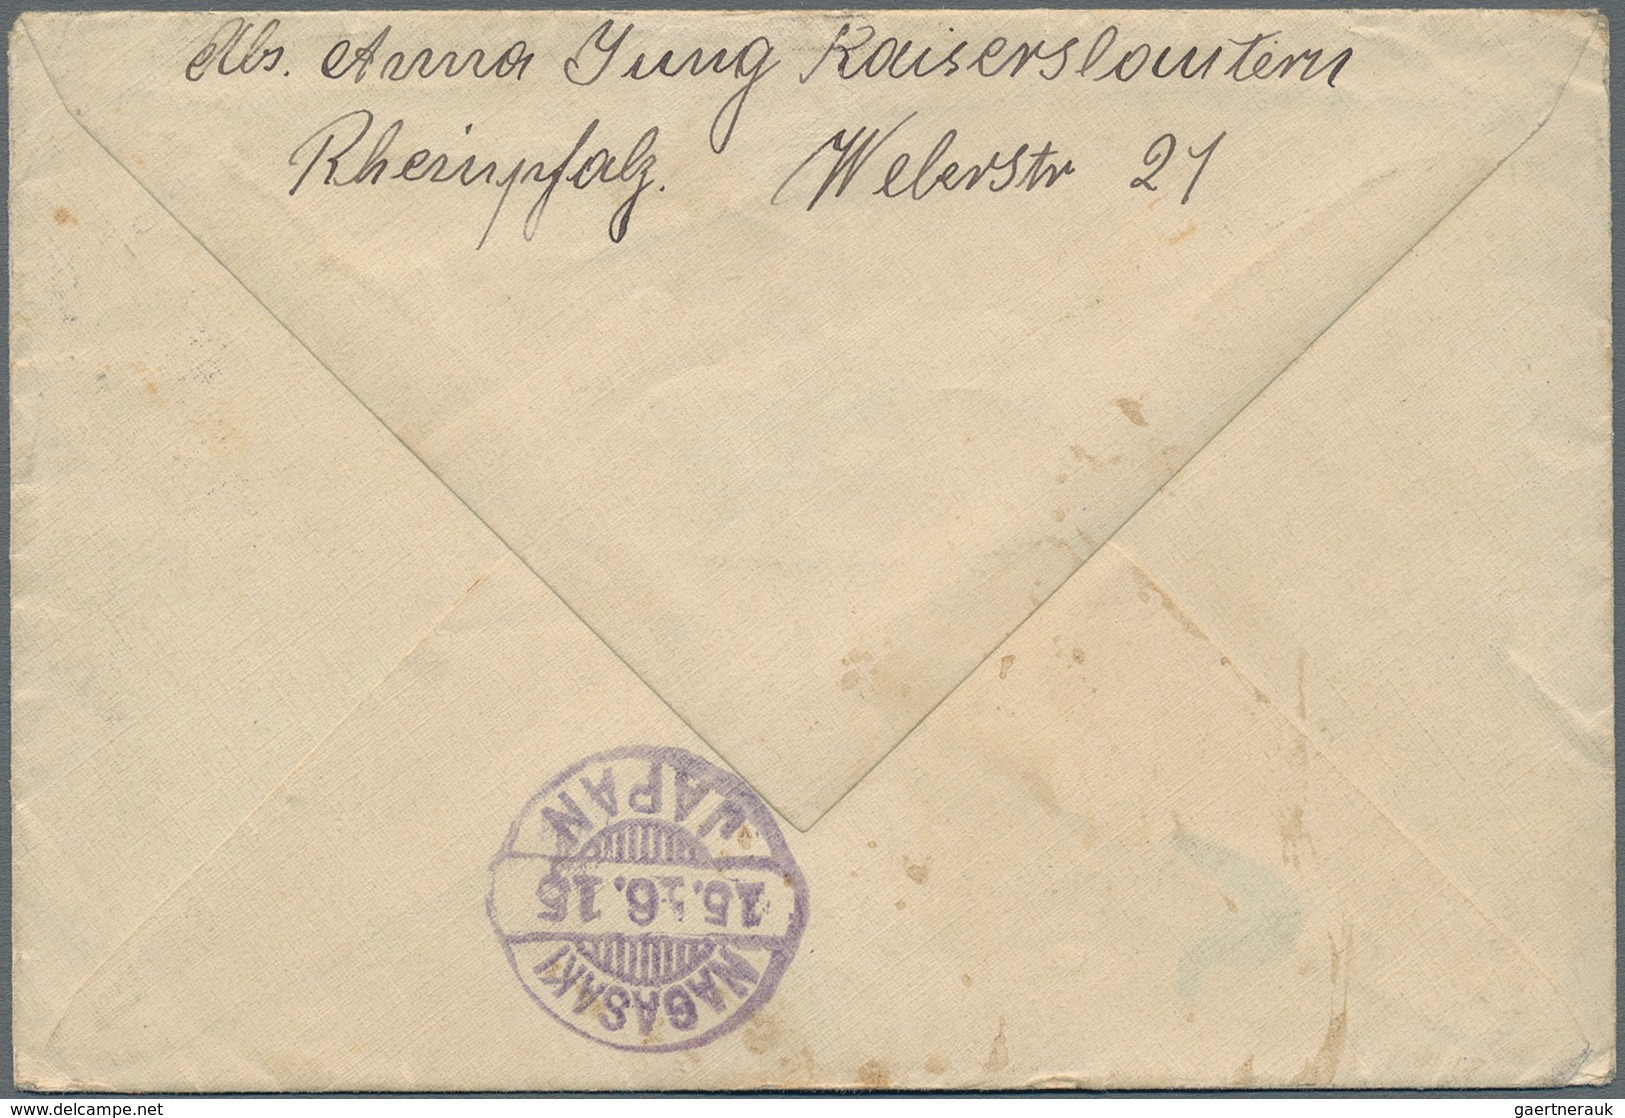 Lagerpost Tsingtau: Fukuoka, 1915, Incoming Mail From Germany, Small Envelope From "Kaiserslautern 2 - China (kantoren)